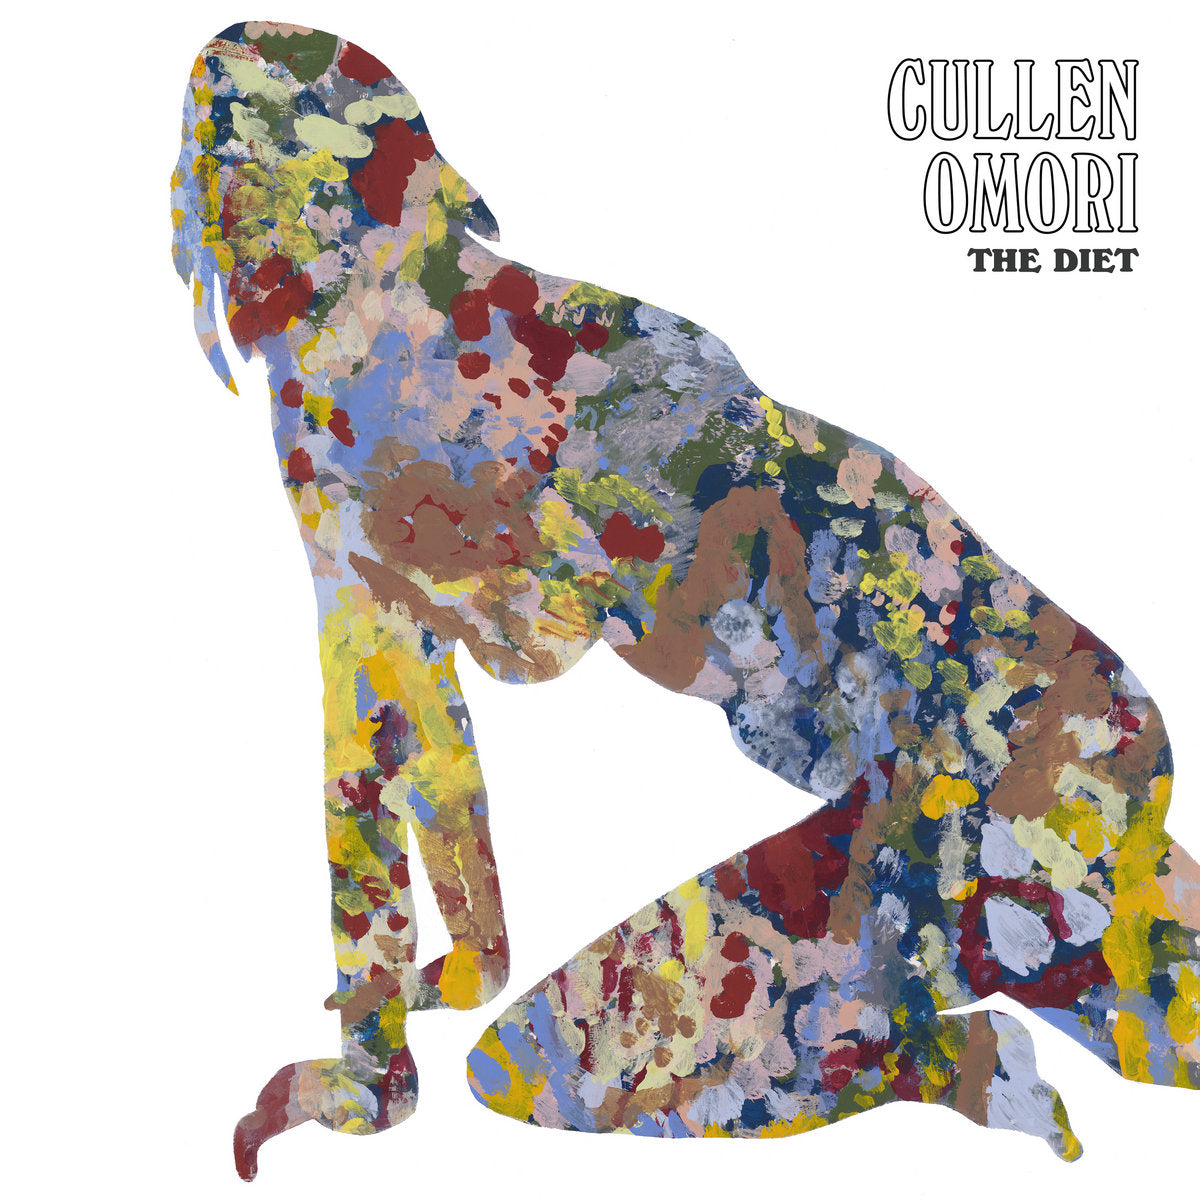 CULLEN OMORI - THE DIET Vinyl LP